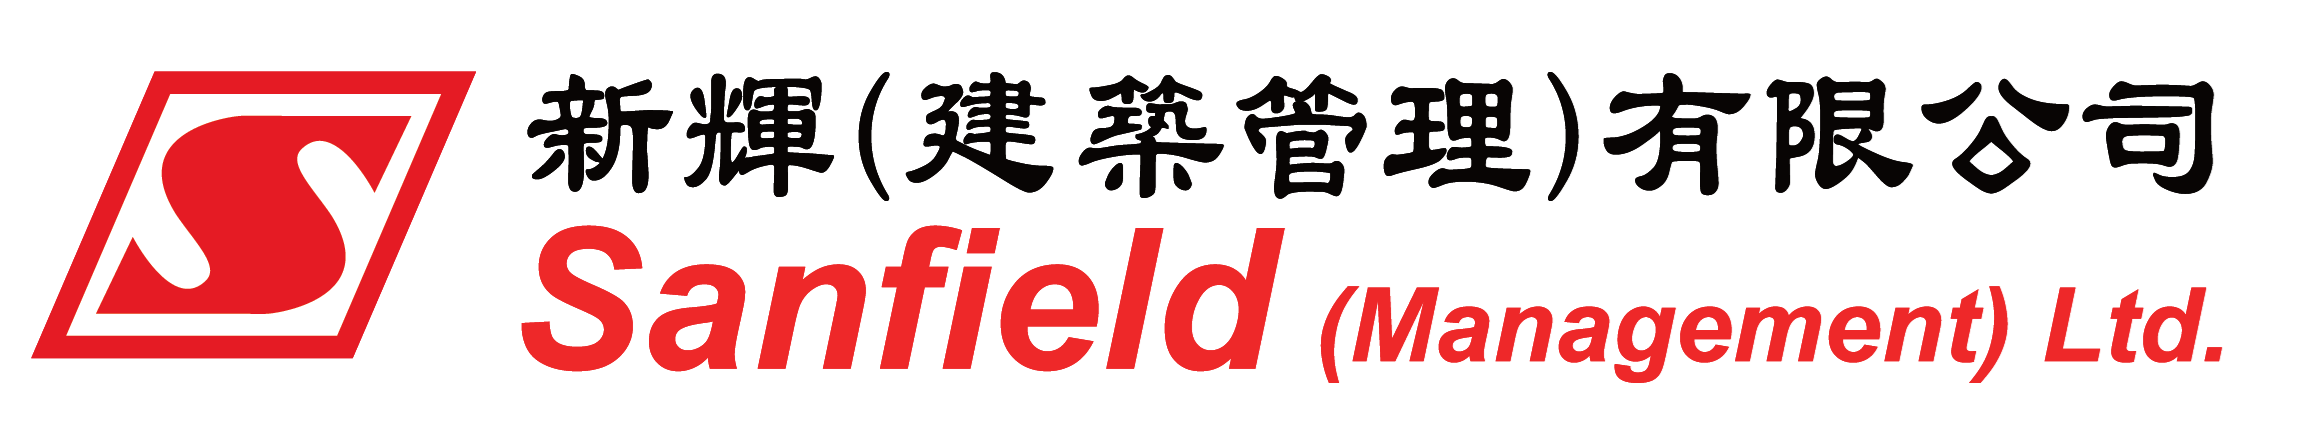 Sanfield Management Logo Name